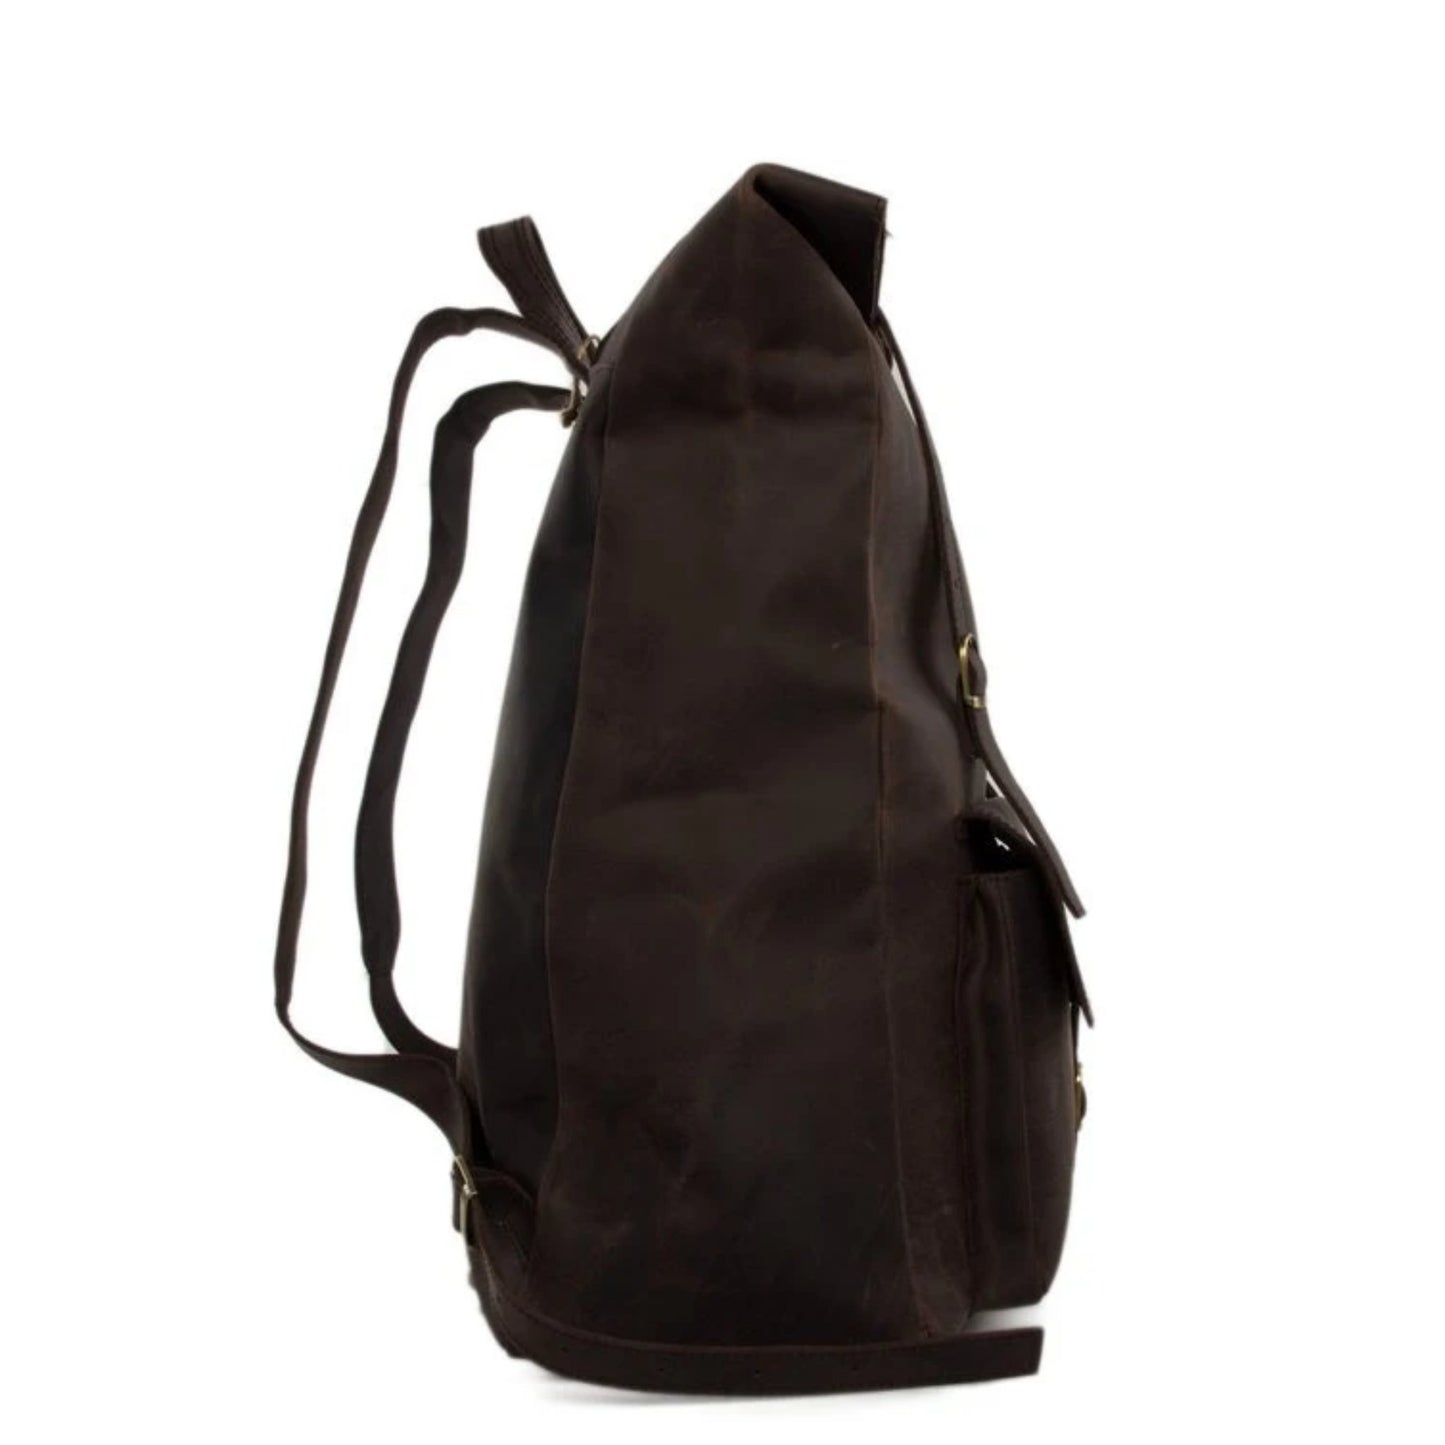 Handmade Genuine Leather Travel Backpack | Dark Brown - Blue Sebe Handmade Leather Bags